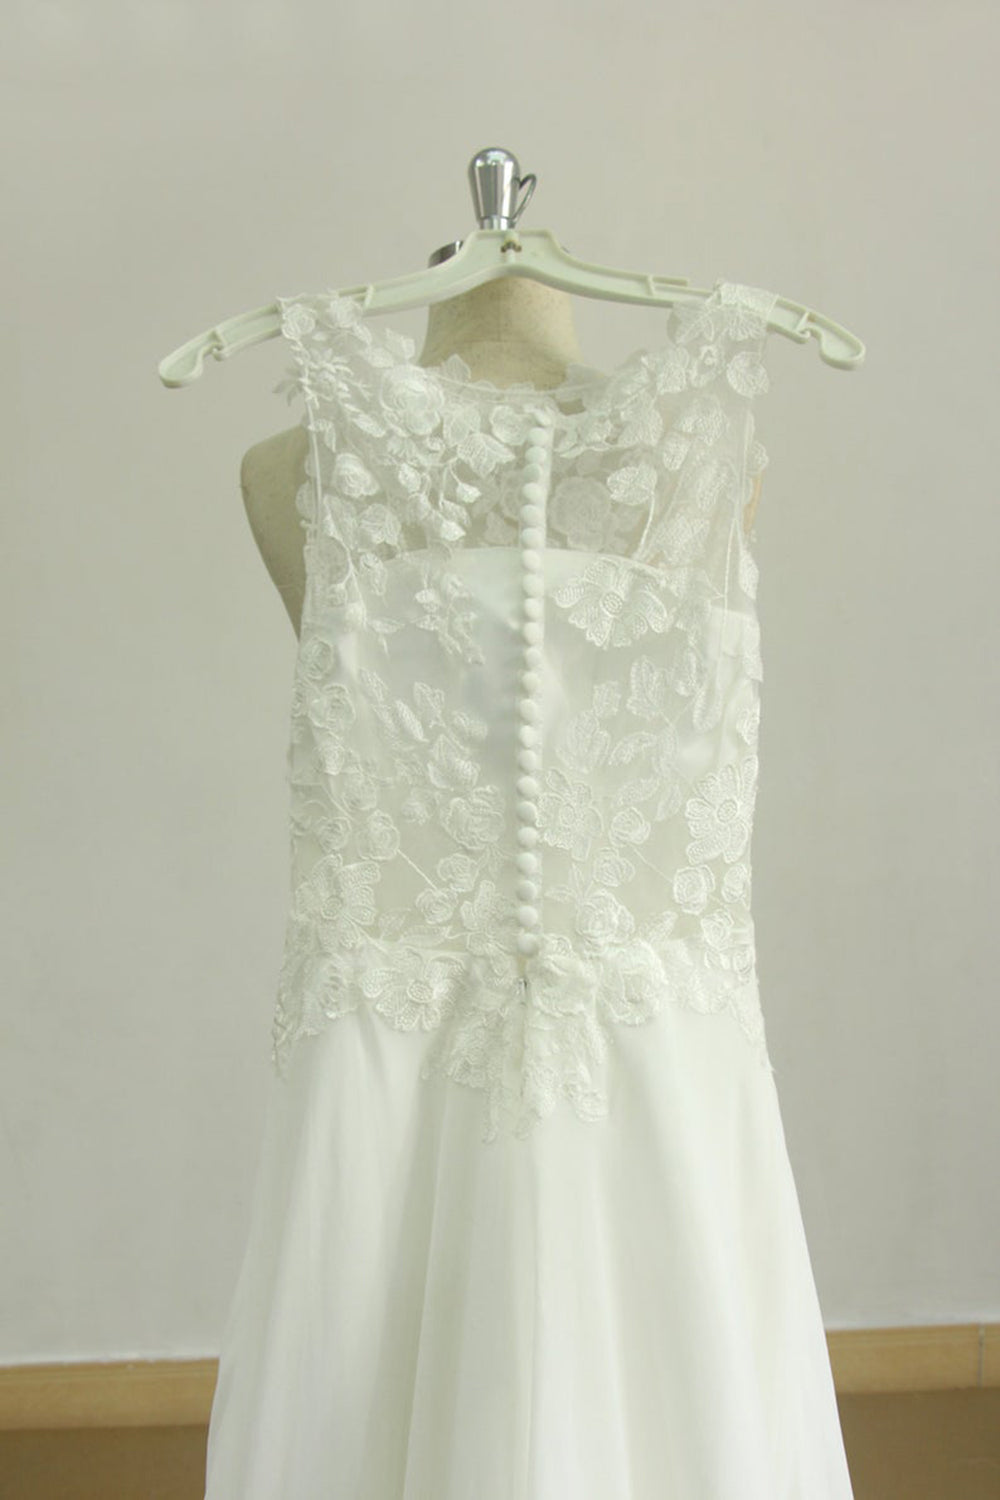 Glamorous Jewel Sleeveless Appliques Wedding Dress Lace White Chiffon Bridal Gowns On Sale-27dress